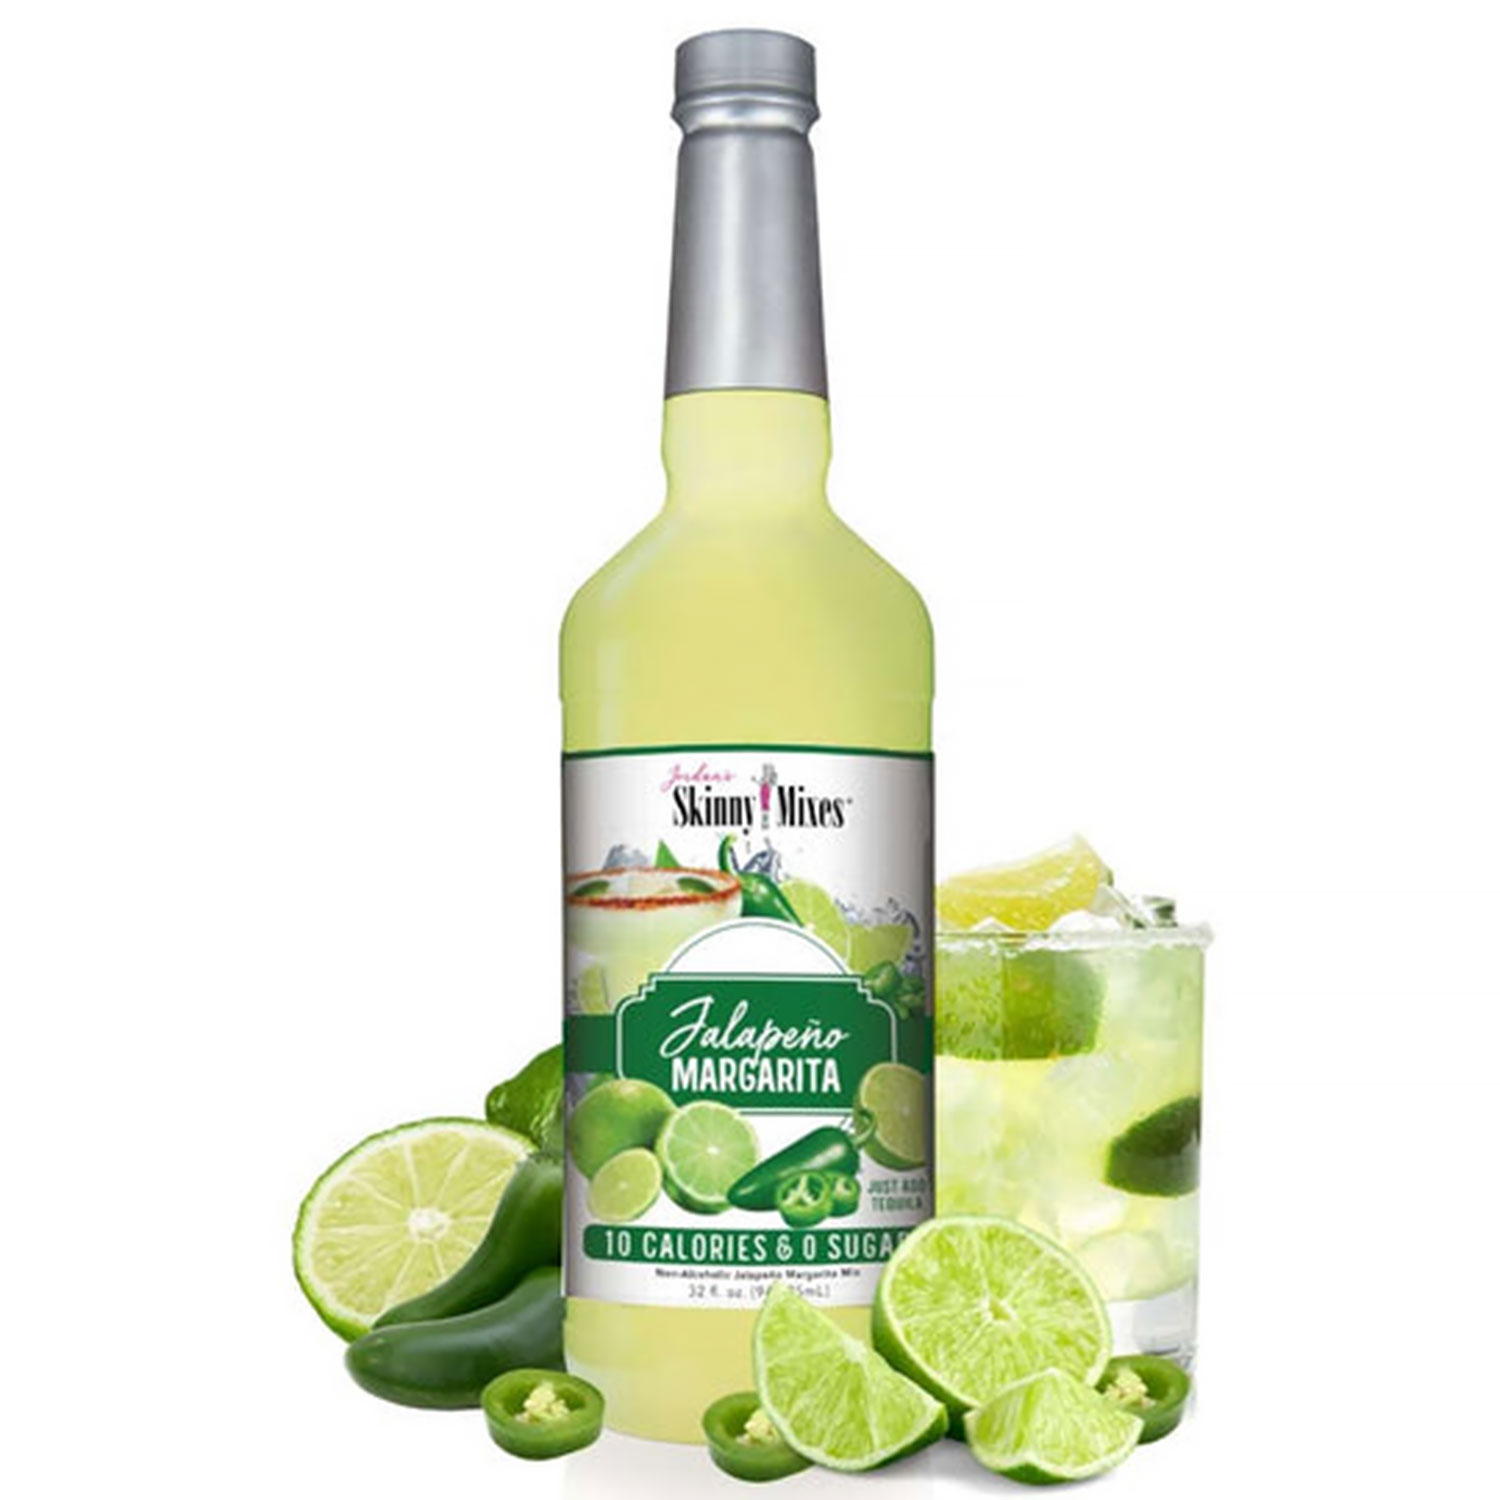 Skinny Jalapeno Margarita Mix